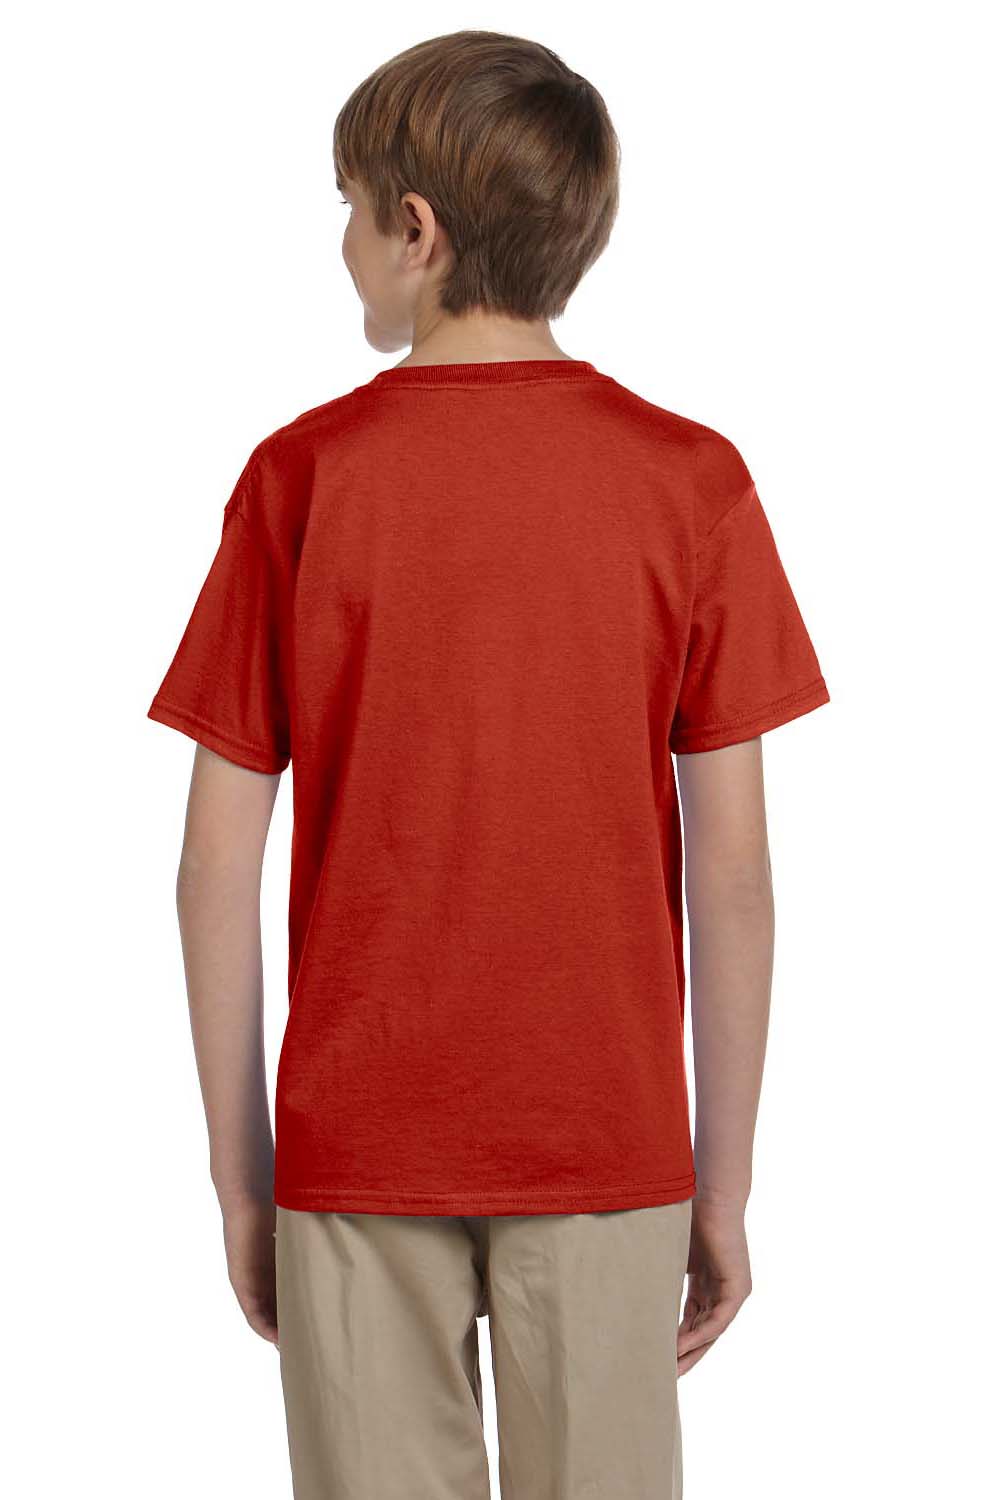 Hanes 5370 Youth EcoSmart Short Sleeve Crewneck T-Shirt Red Back